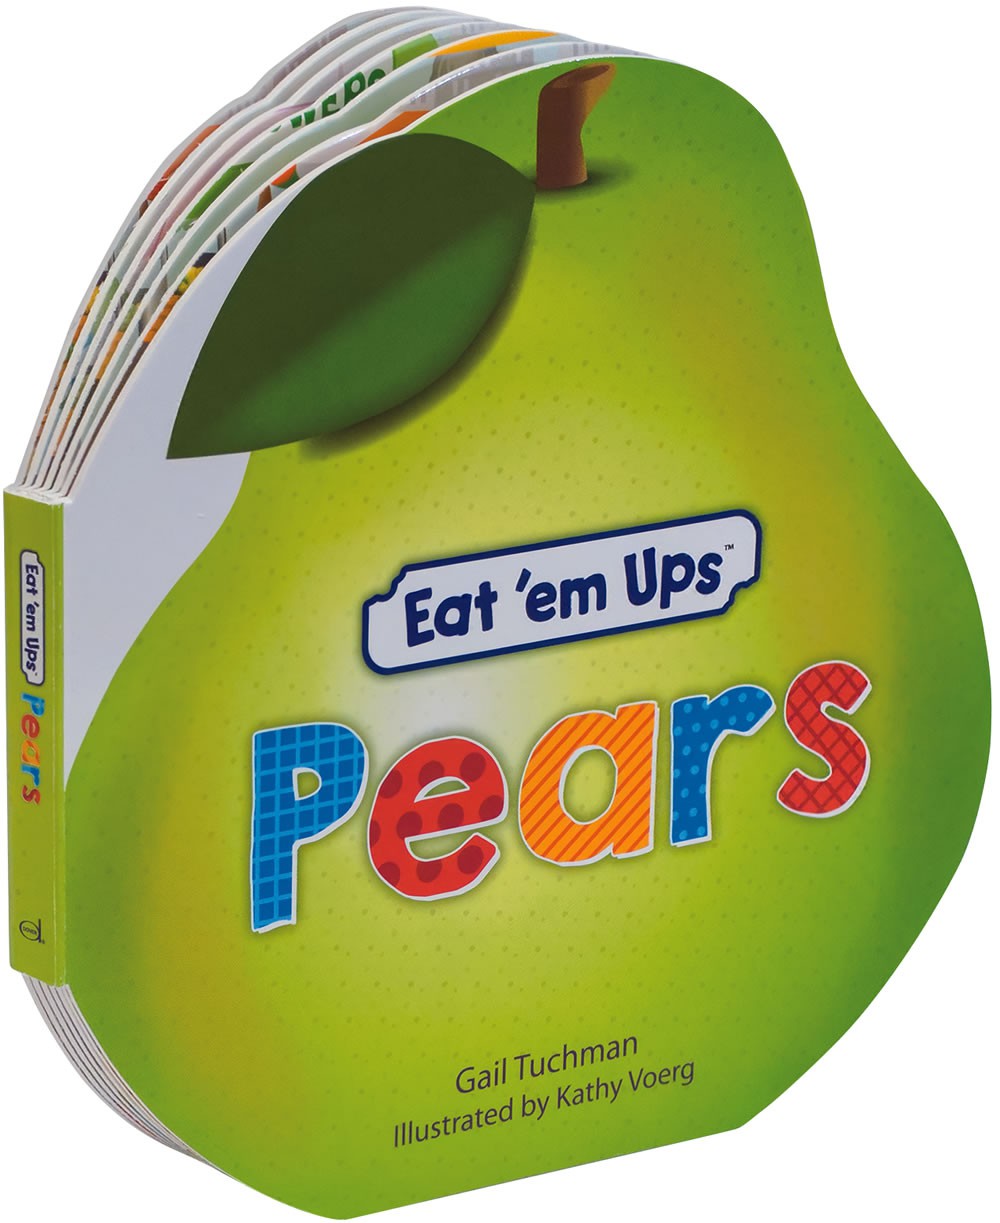 Dover Eat 'em Ups™ Pears